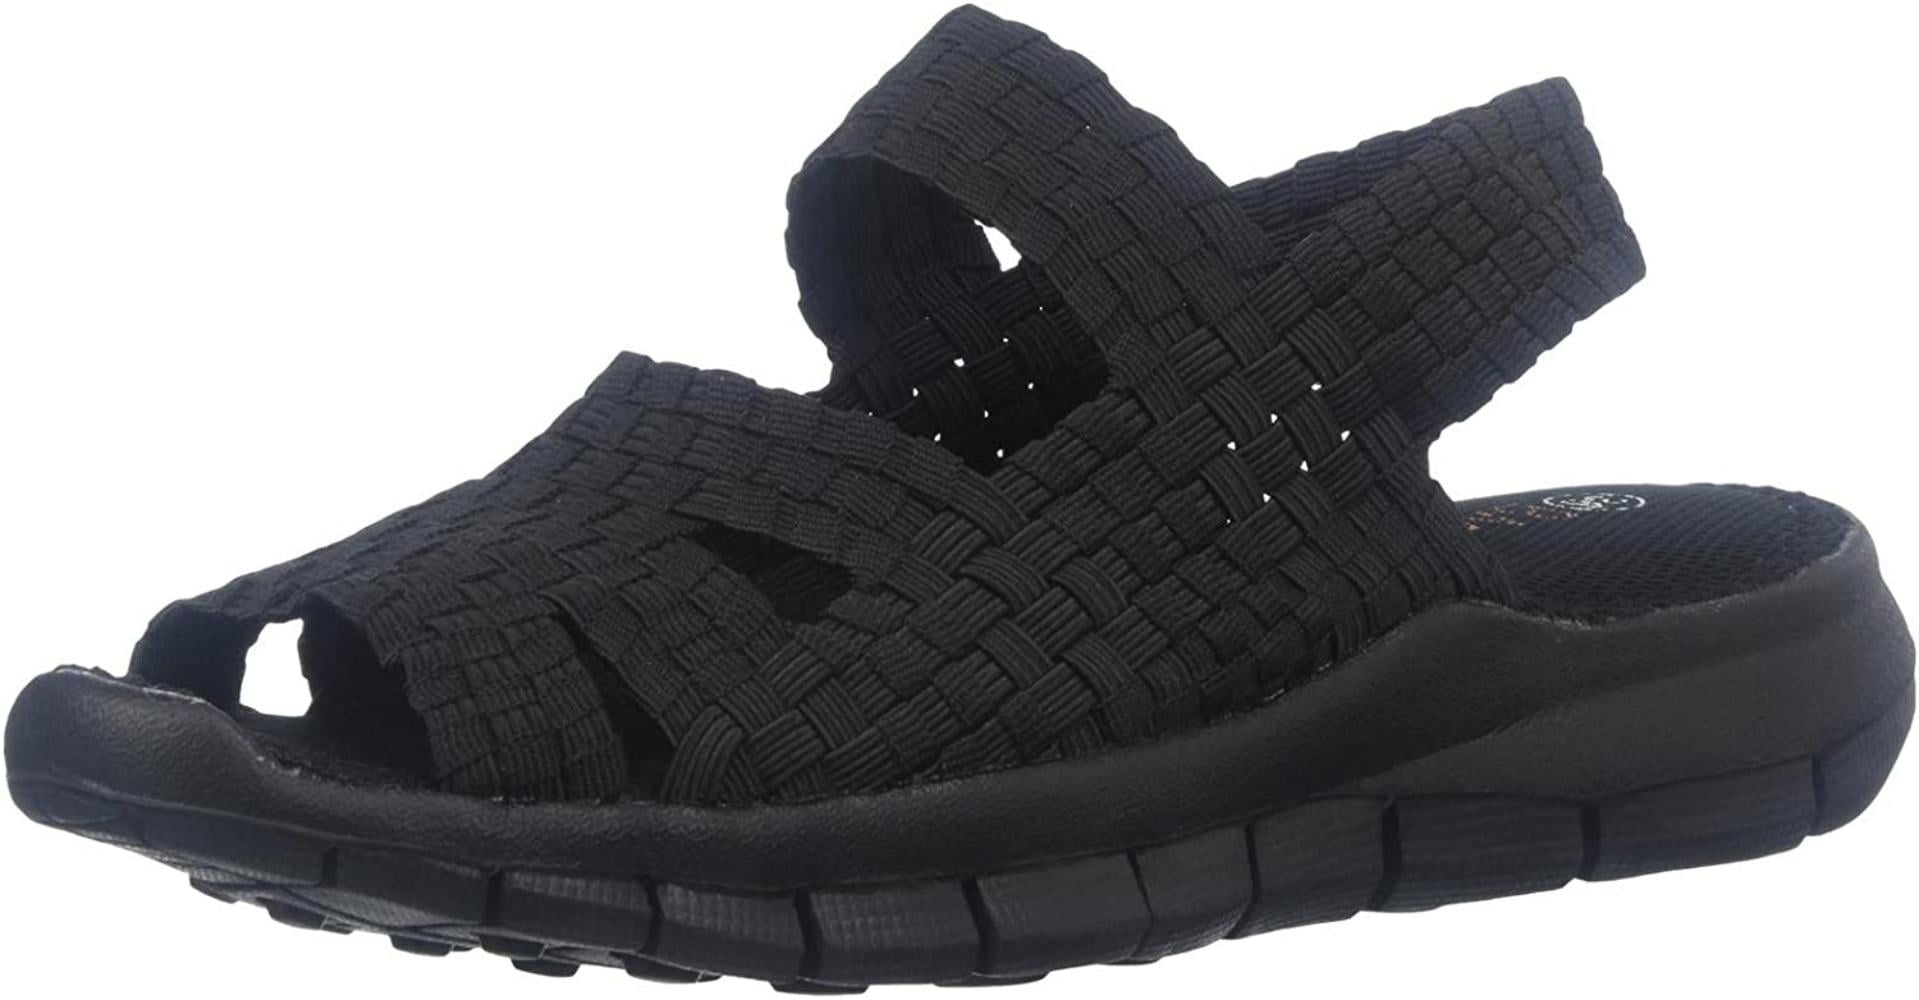 Cindy Casual Woven Slingback Sandals Black *New* Women's Shoes Bernie Mev 